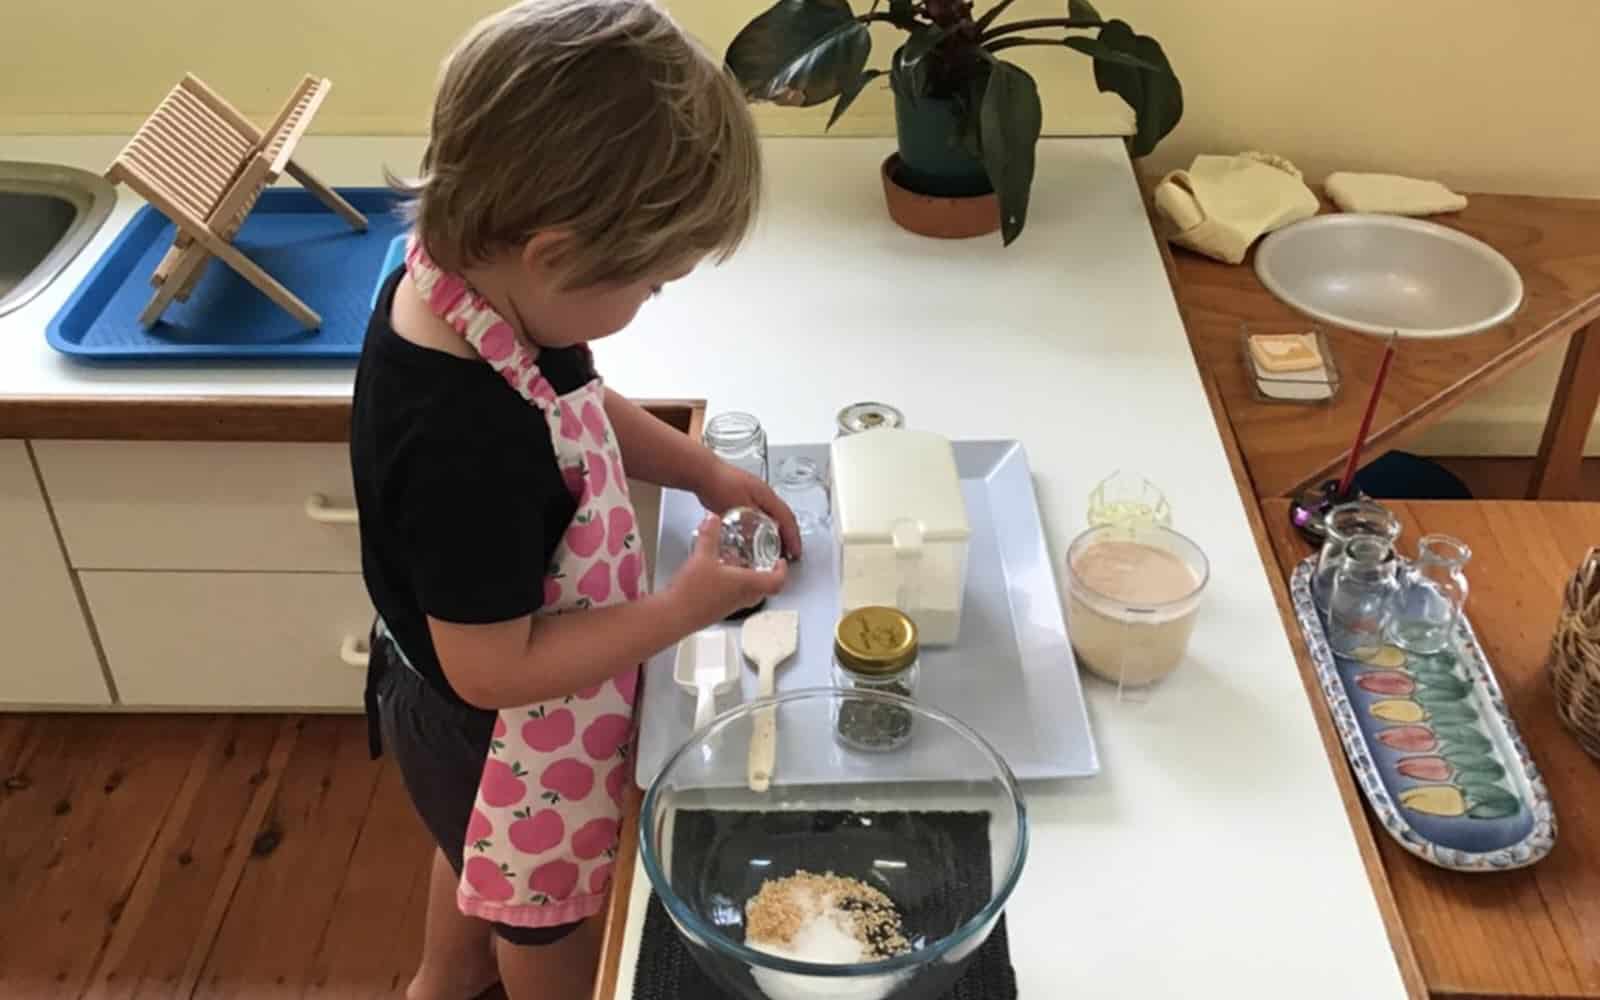 How We Montessori: A Montessori View on Chores